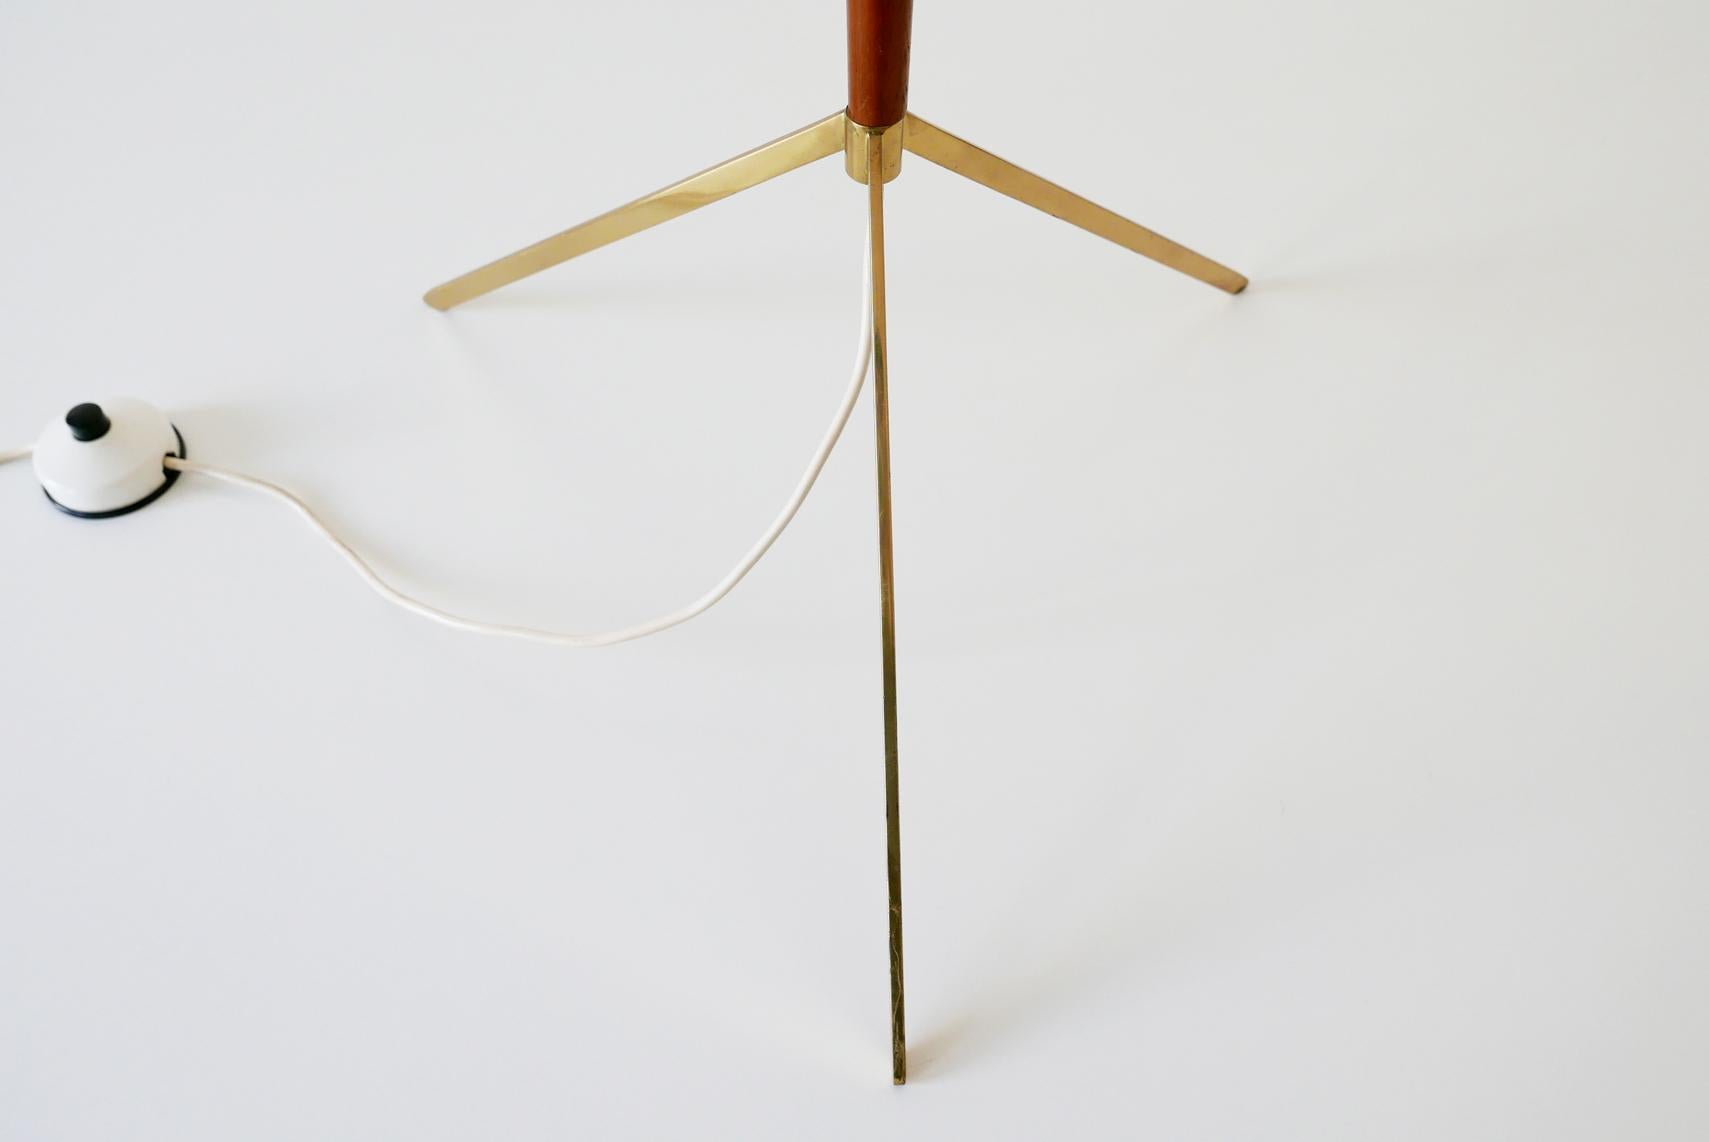 Wood Elegant Mid-Century Modern Tripod Floor Lamp by J.T. Kalmar, Austria, 1950s For Sale